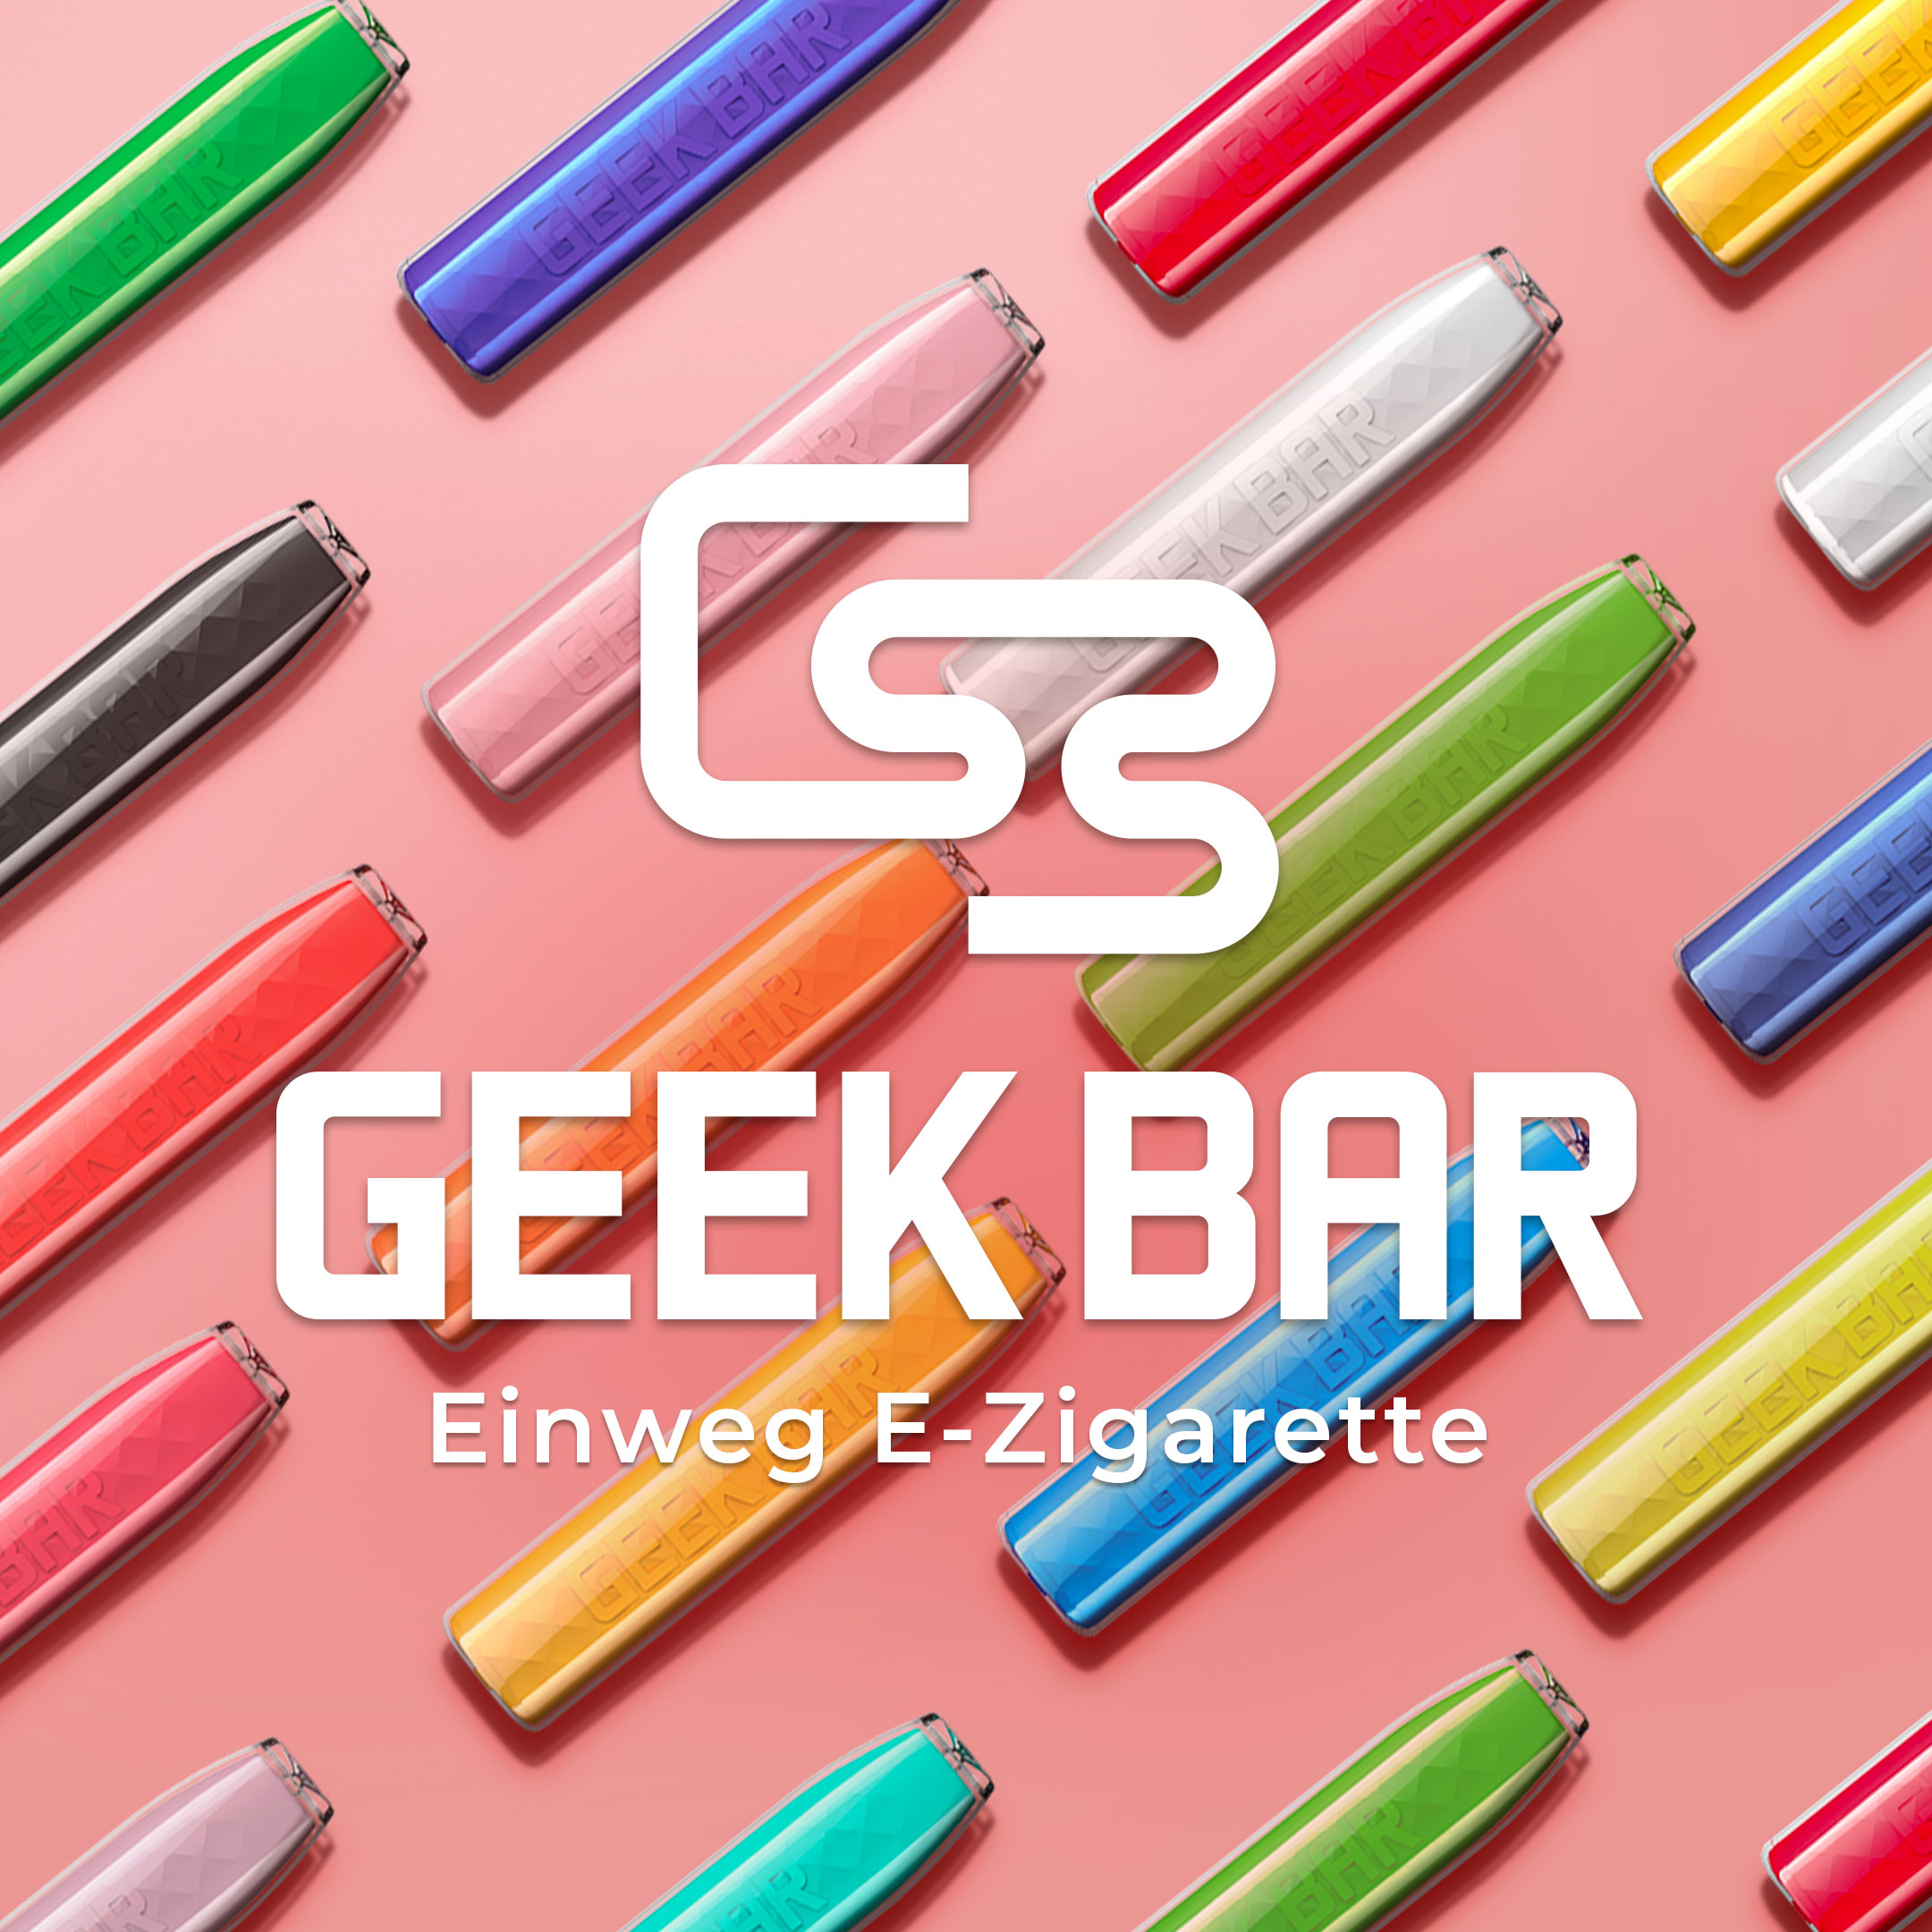 GEEKBAR by Geekvape - Einweg E-Zigarette Vape Pen 20mg/ml Banana ICE